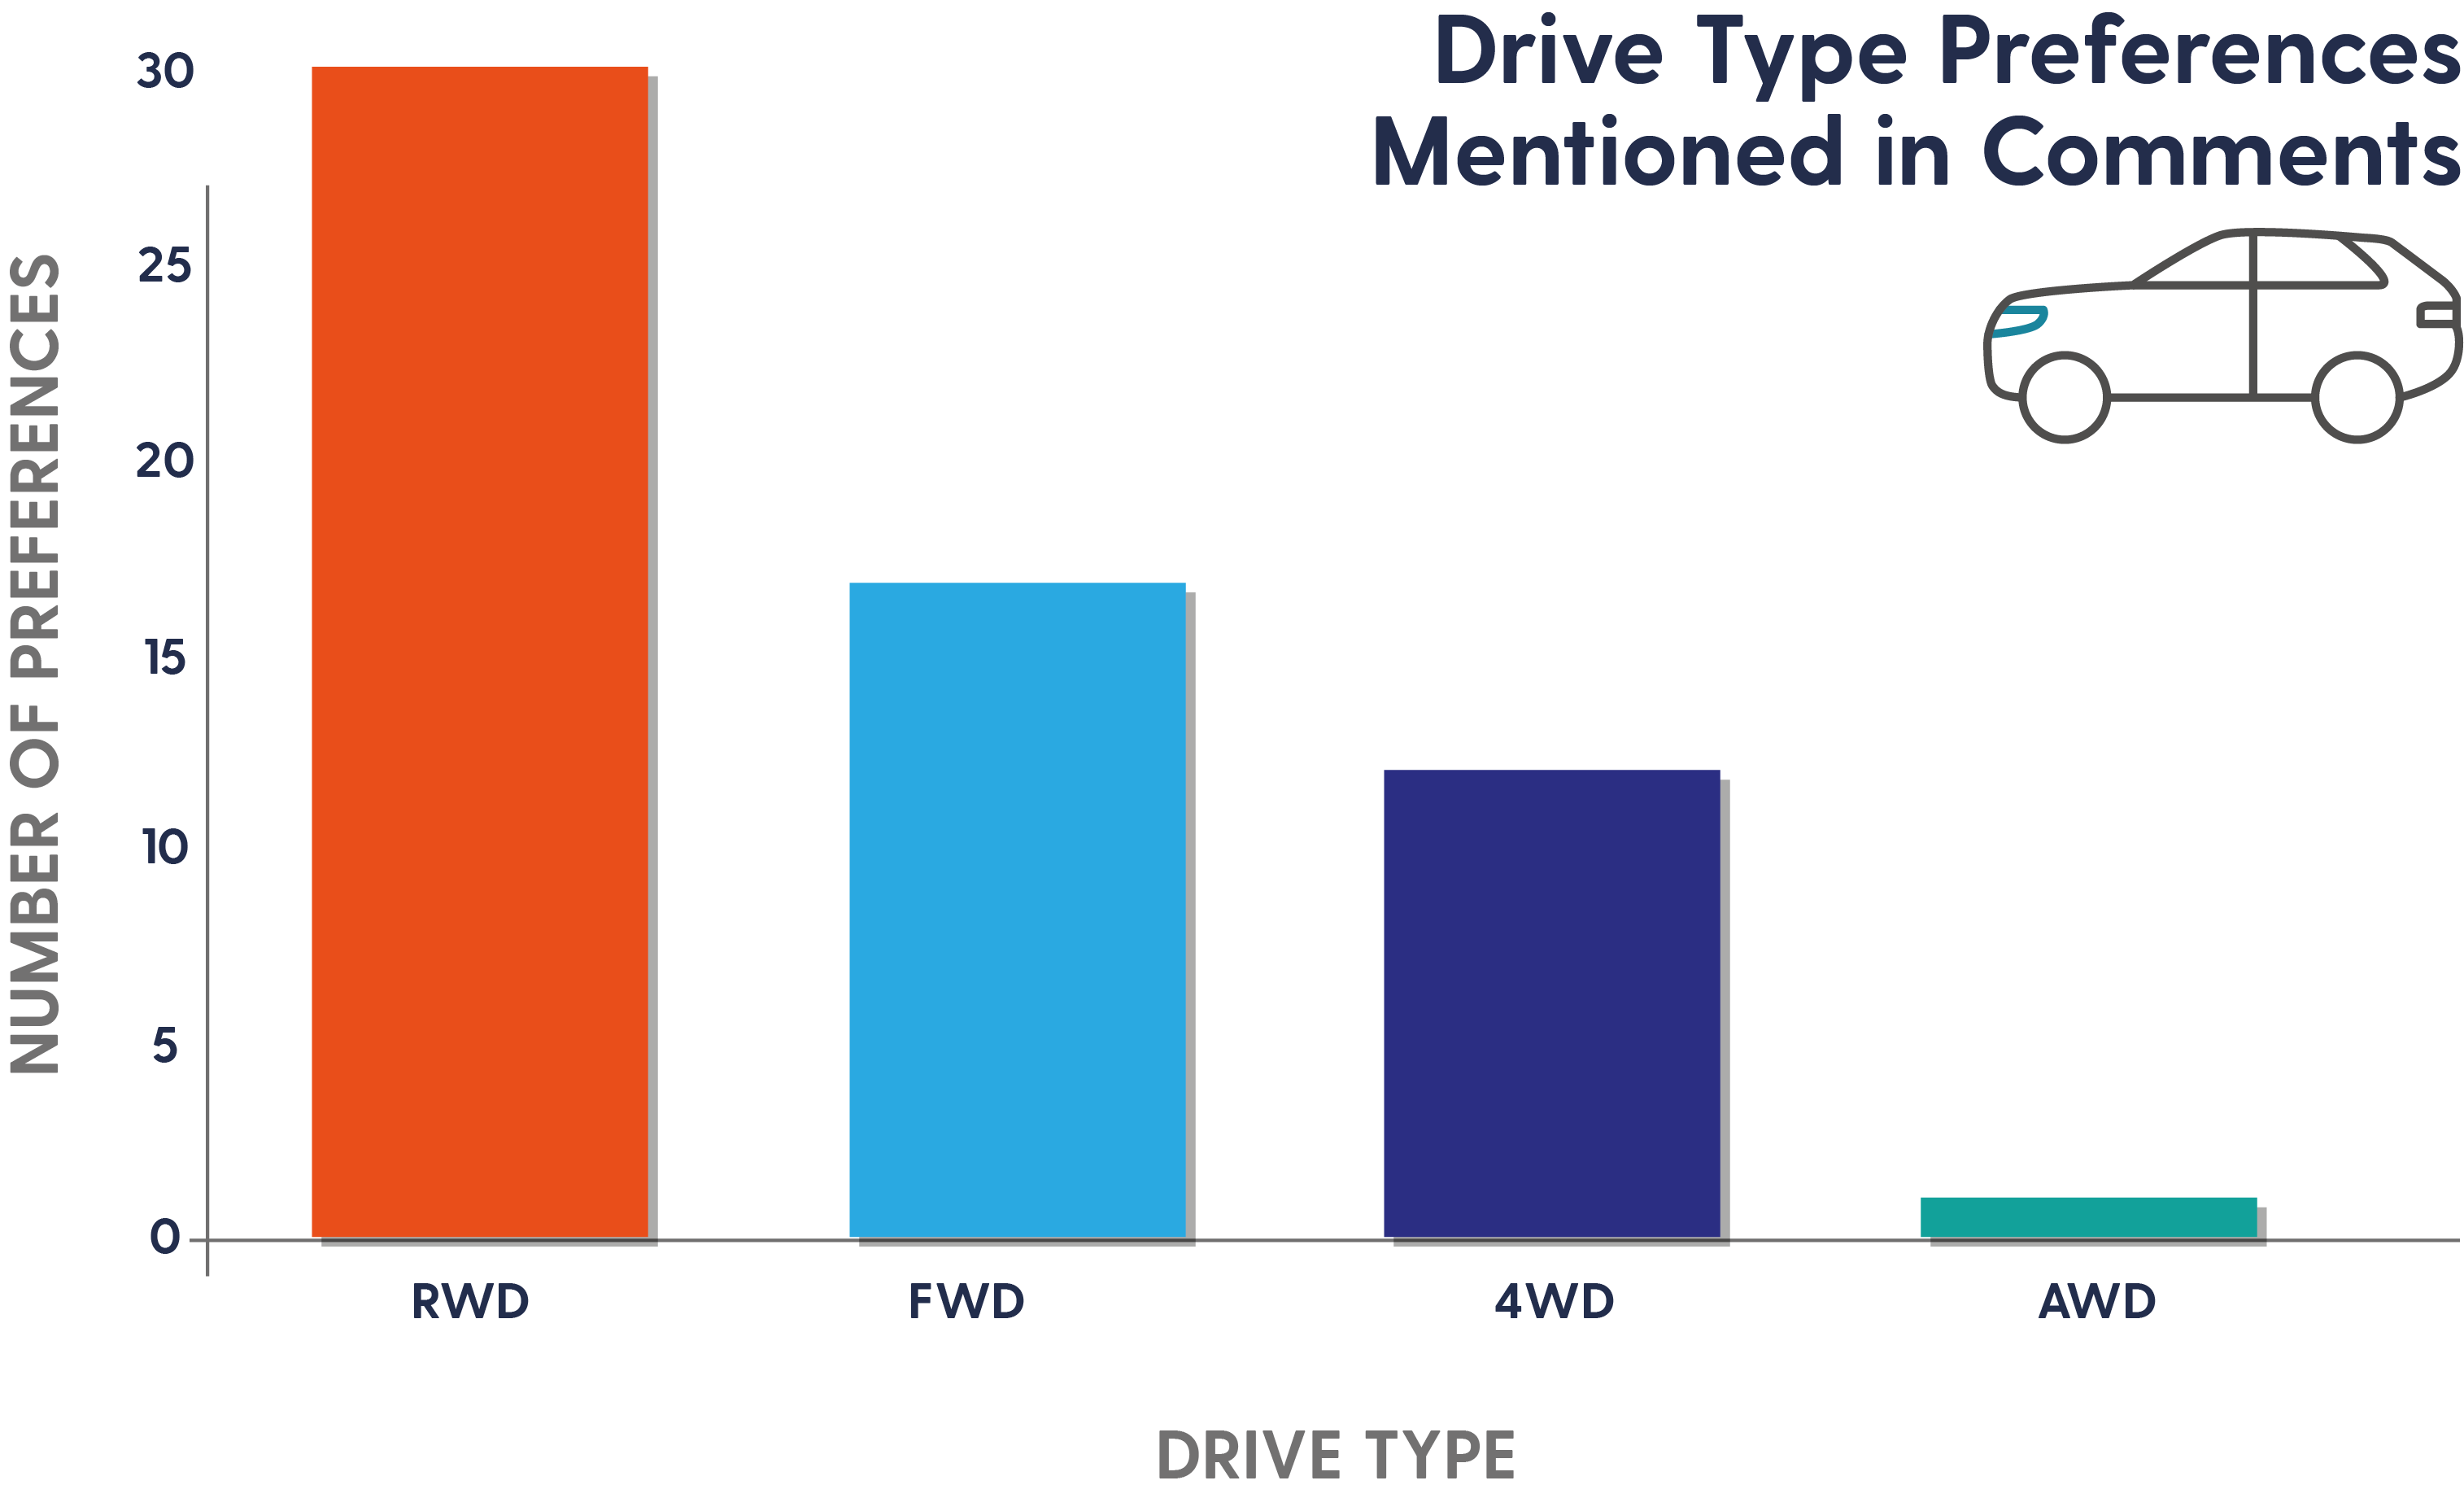 car enthusiast survey result in a bar graph regarding the prefer drive train